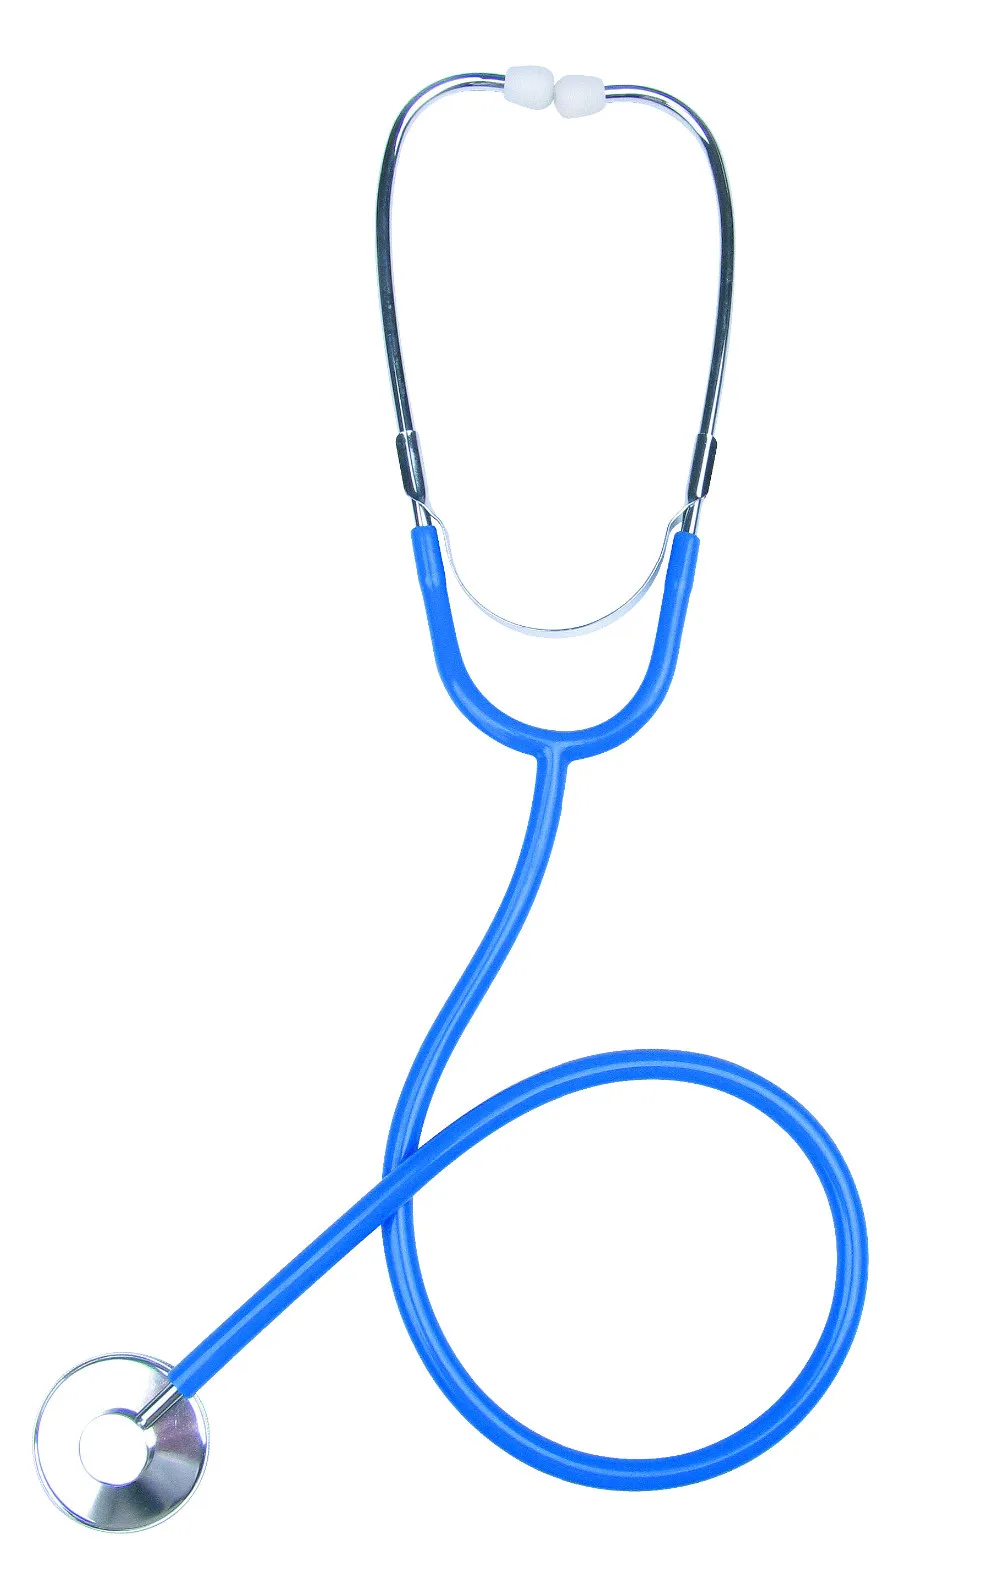 Gambar Fungsi Stetoskop  Pemeriksaan Kesehatan Tokoalkes 